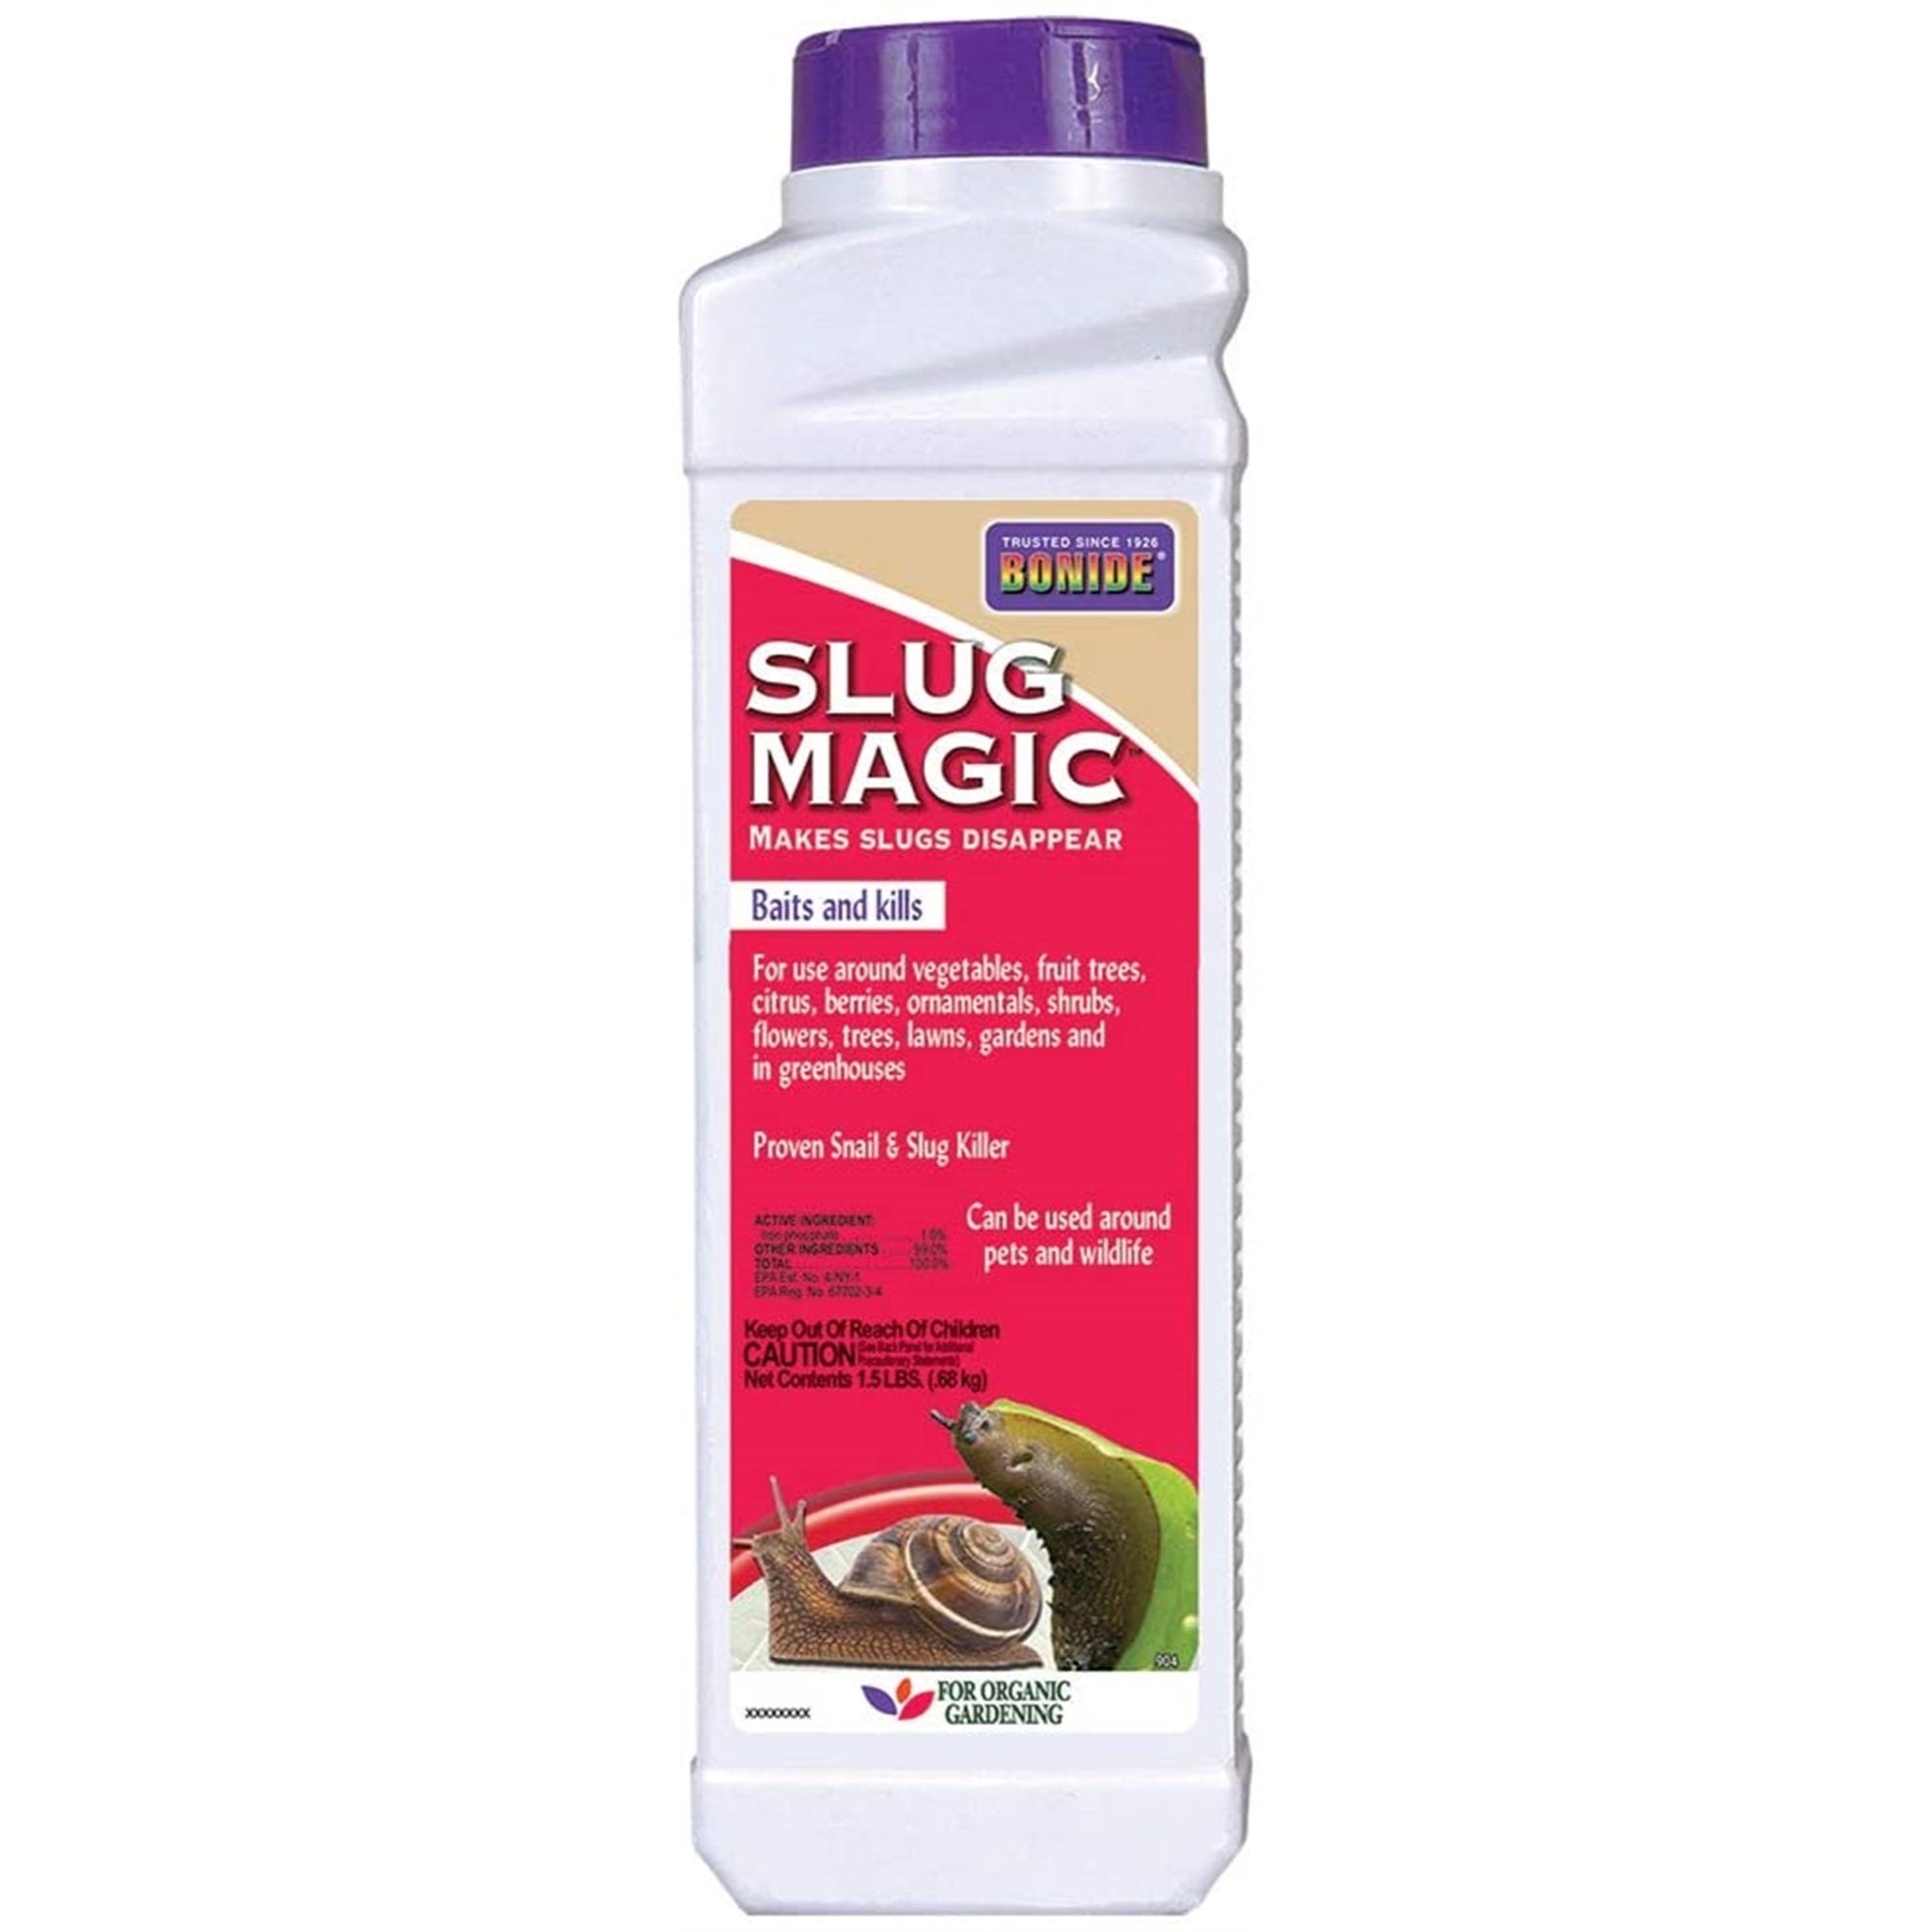 Bonide Slug Magic Pesticide/Remover, 24 Ounce